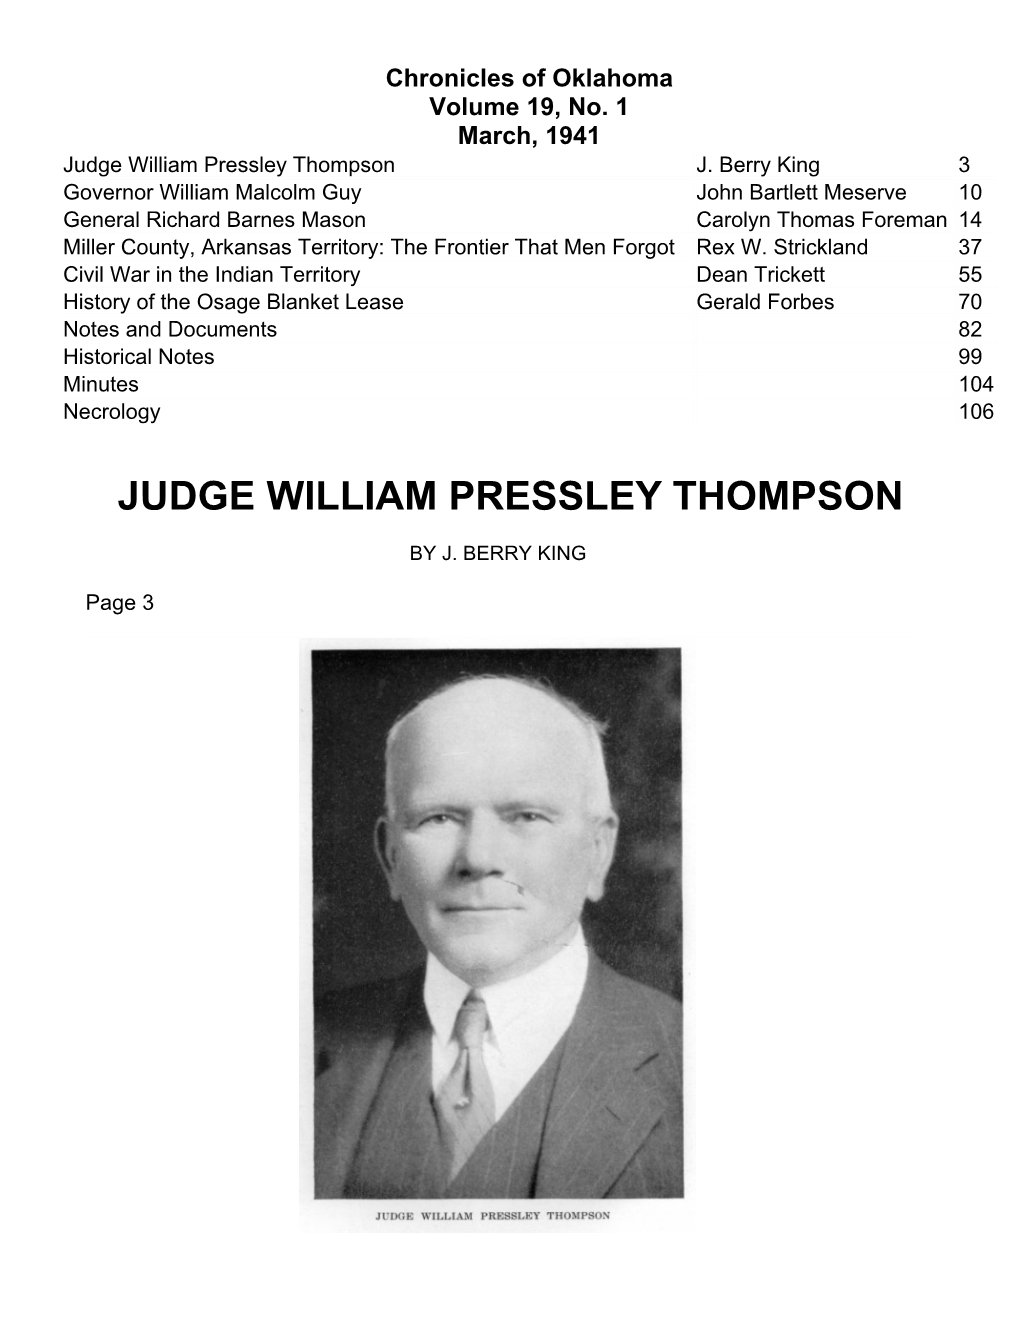 Judge William Pressley Thompson J